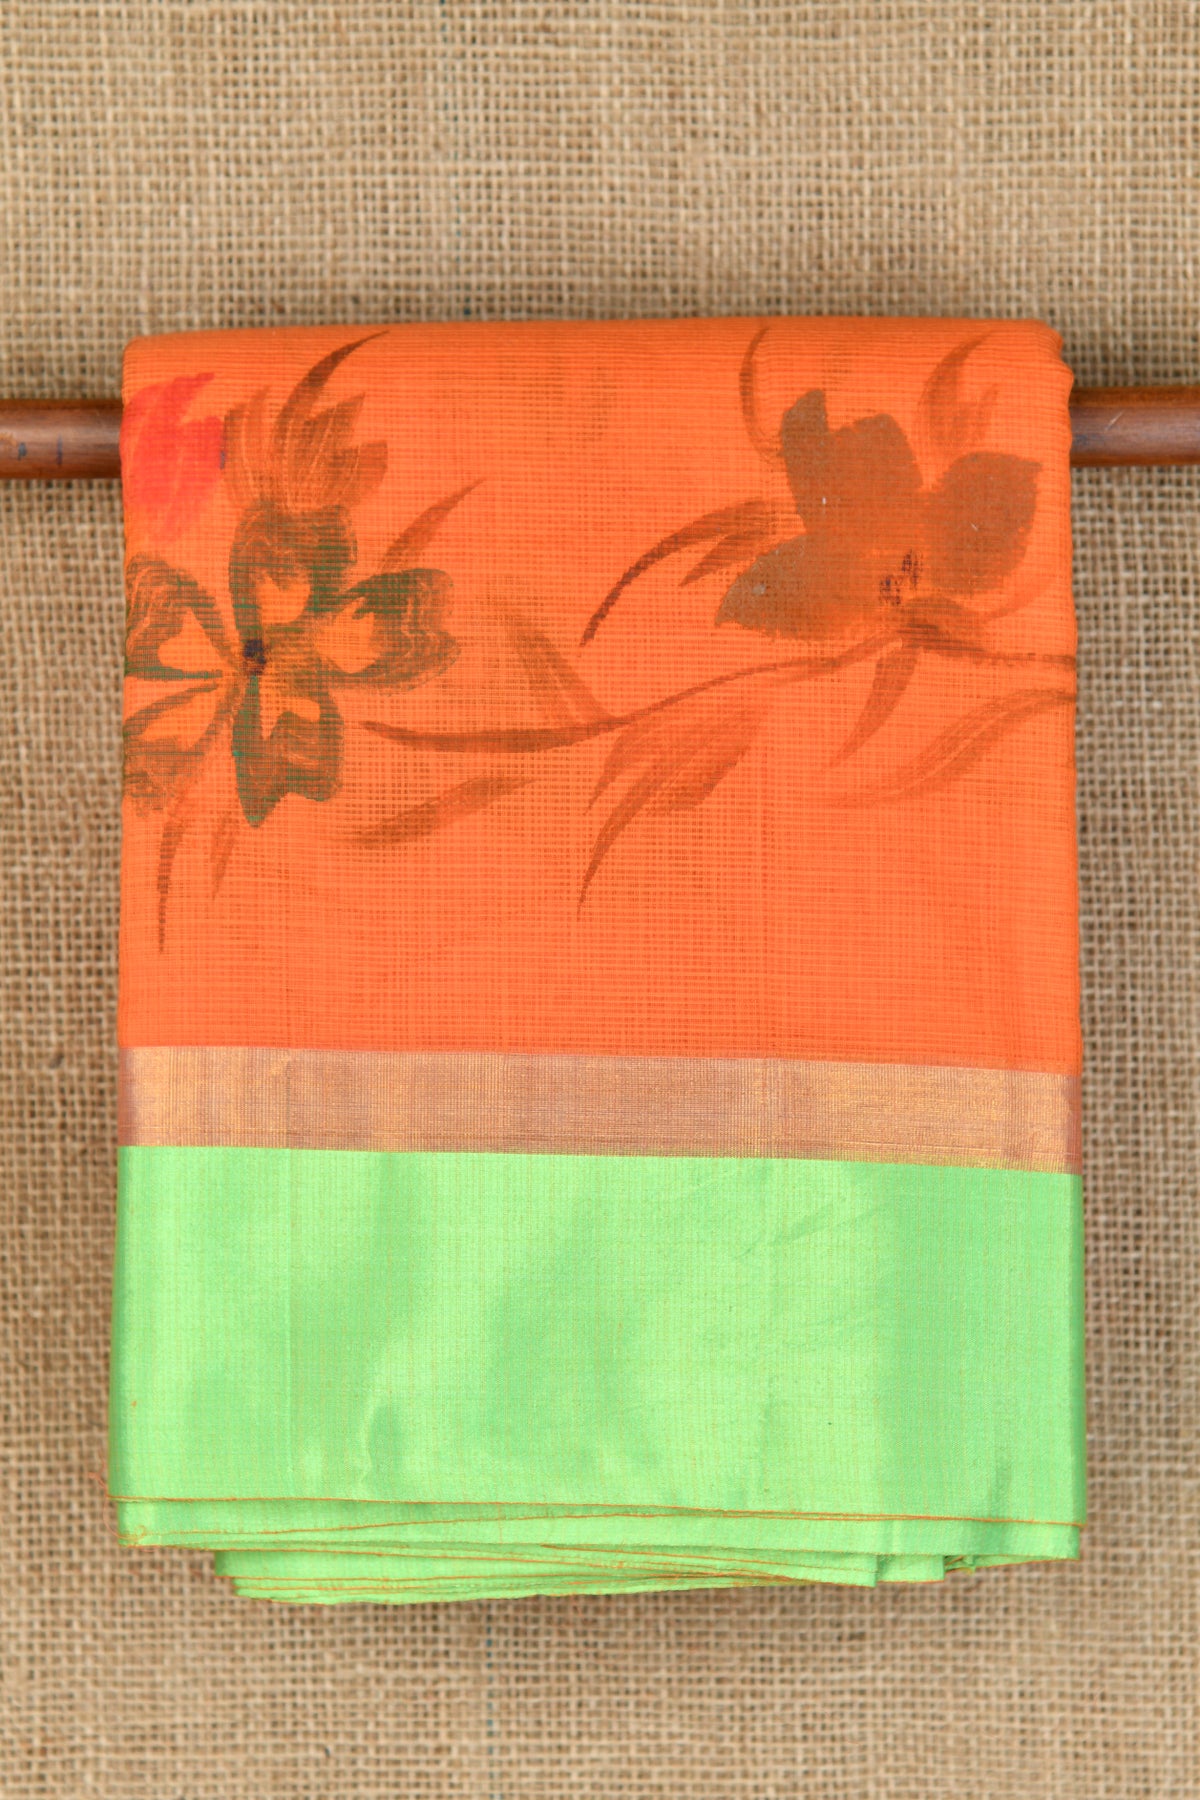 Contrast Border With Floral Digital Printed Orange Kota Cotton Saree